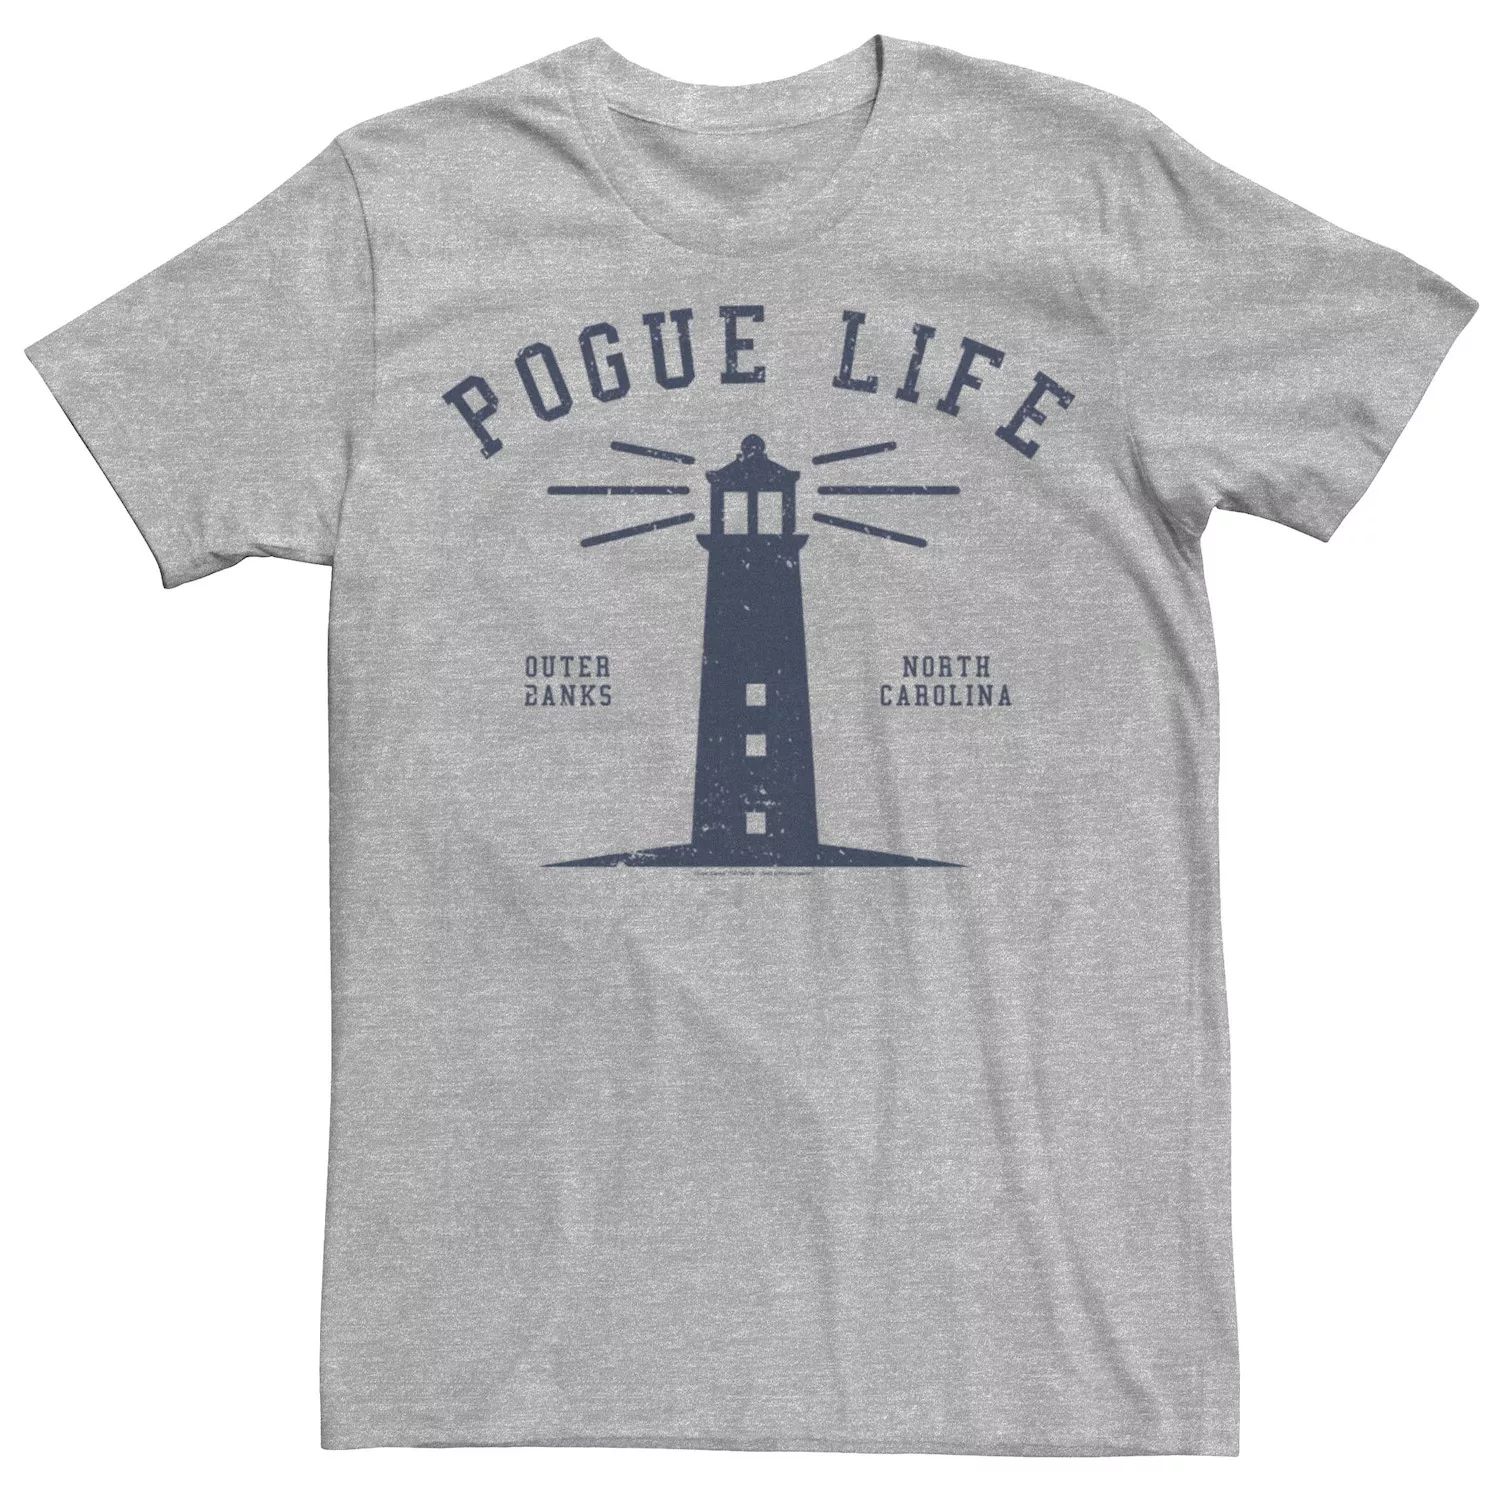 Мужская футболка Outer Banks Pogue Life с дизайном маяка Licensed Character мужская футболка outer banks obx pogue life licensed character